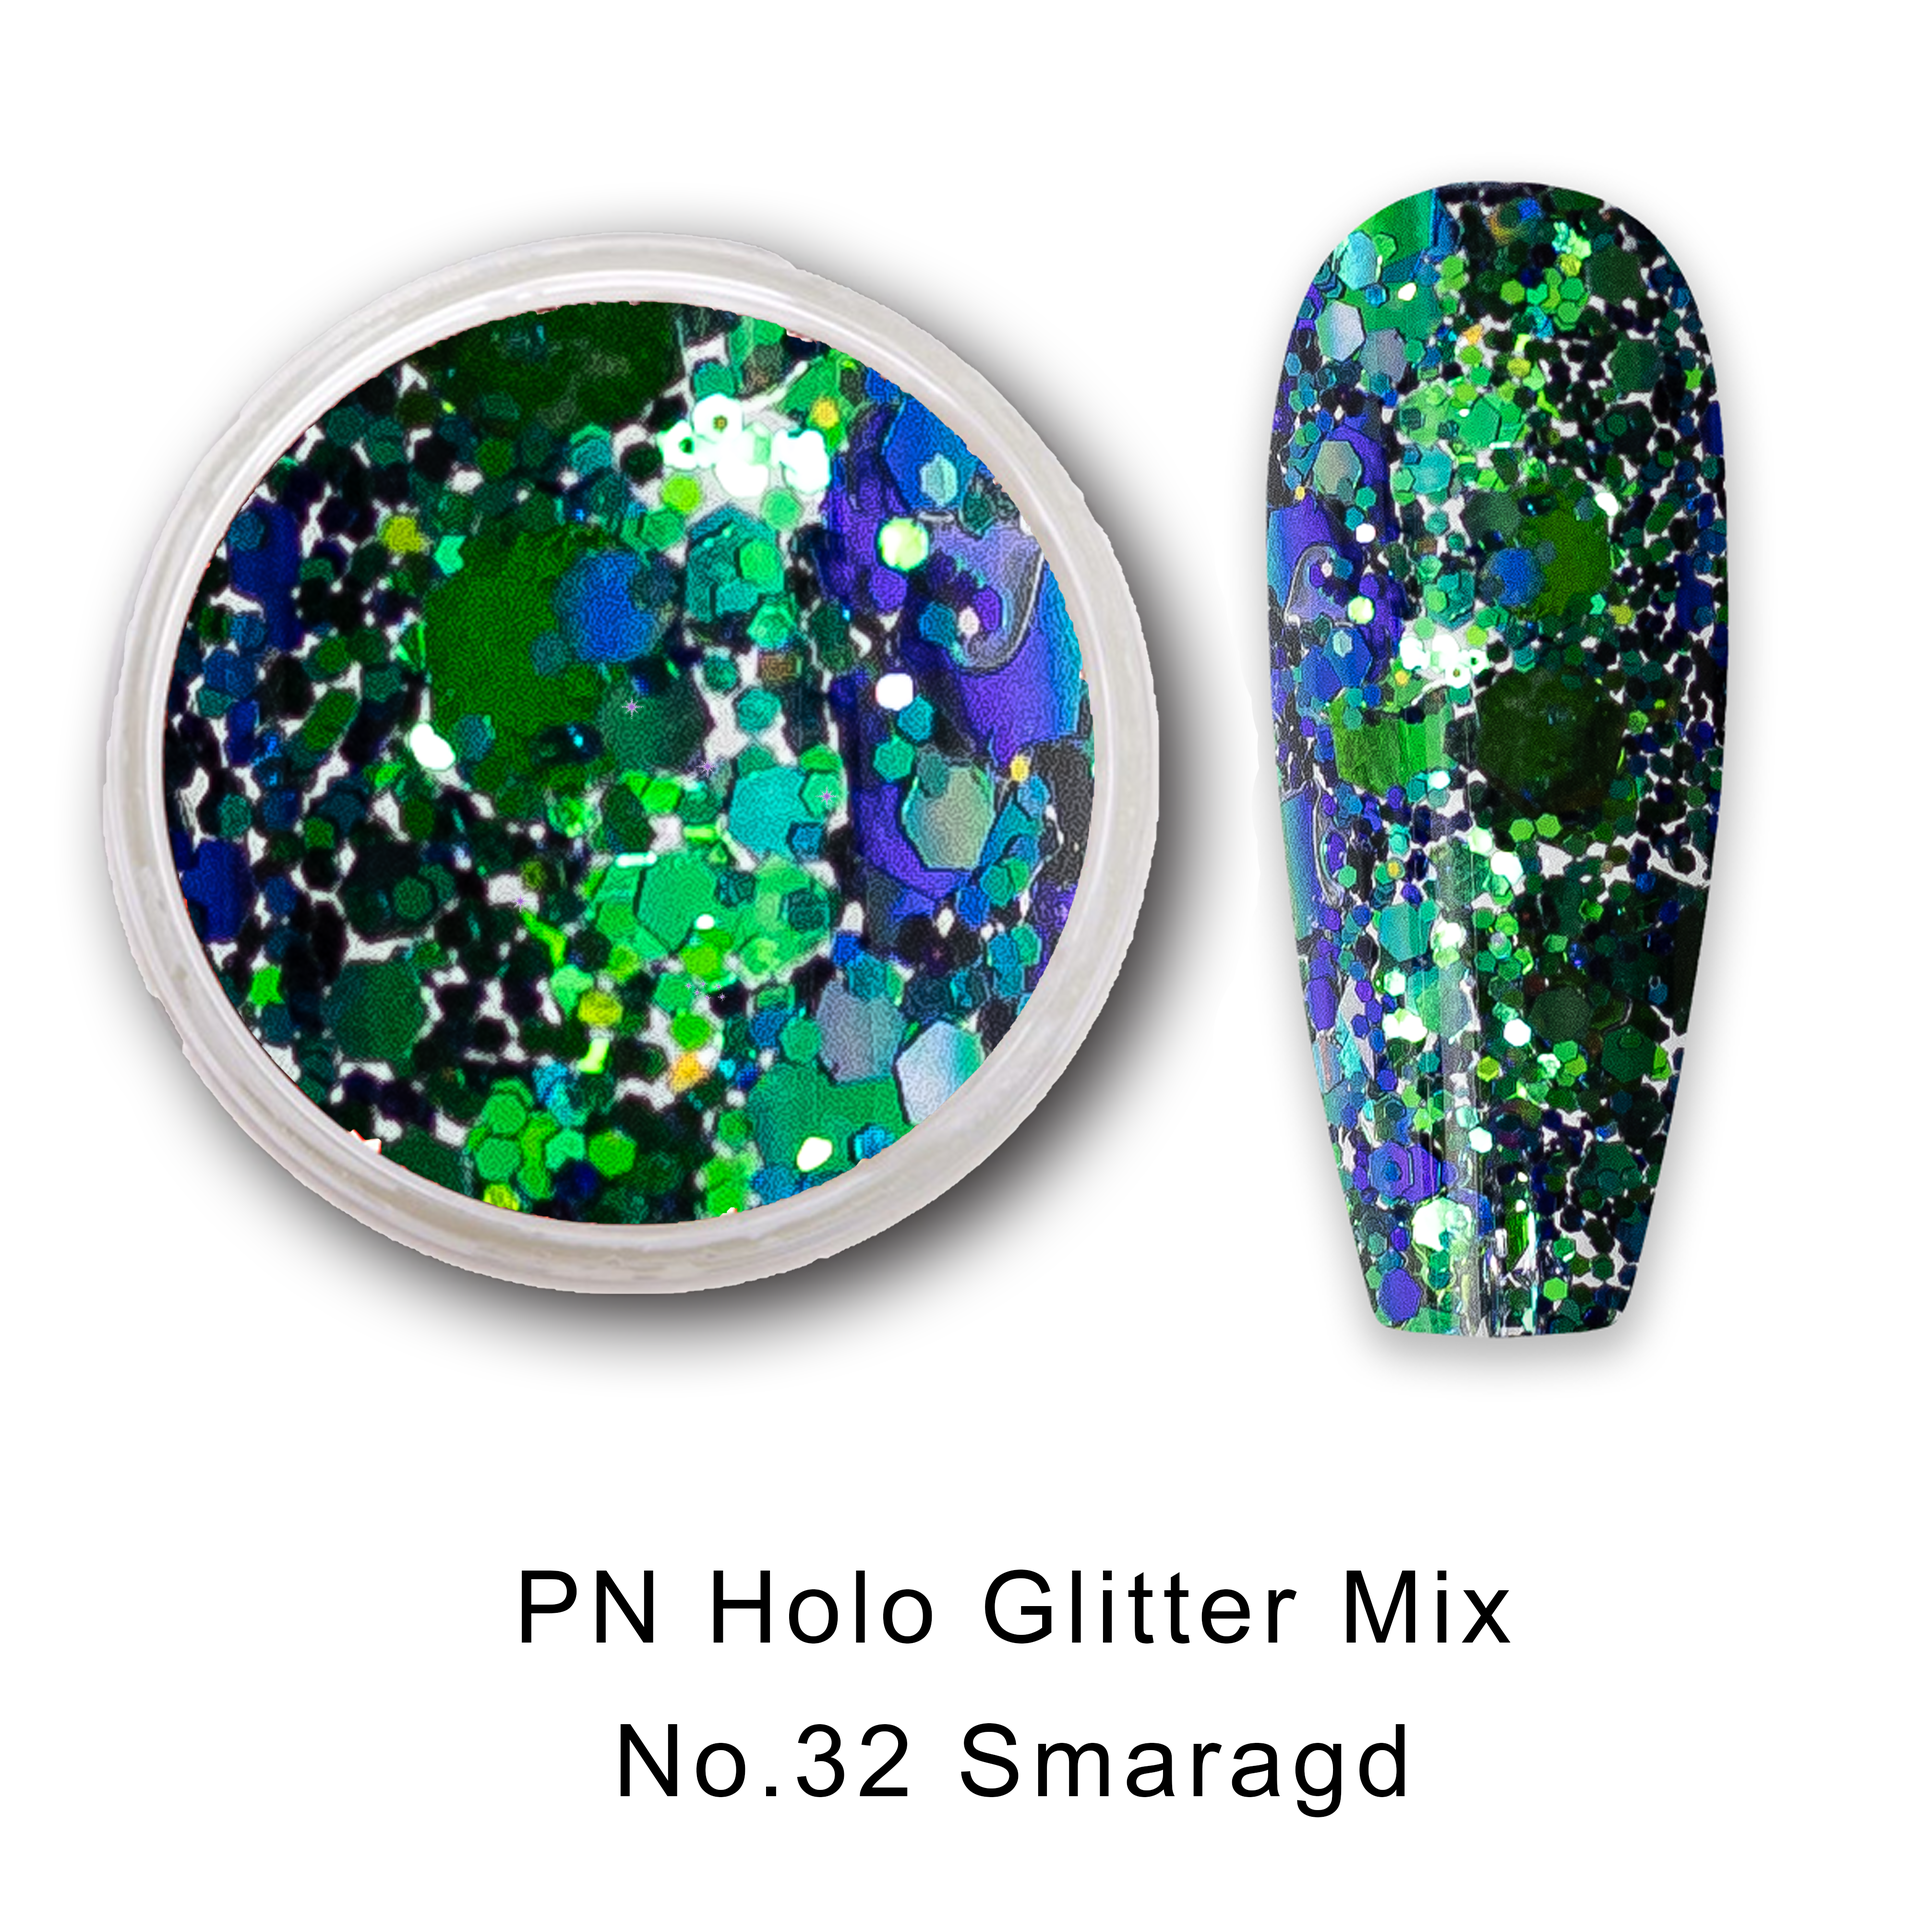 PN Holo glitter mix No.32 Smaragd